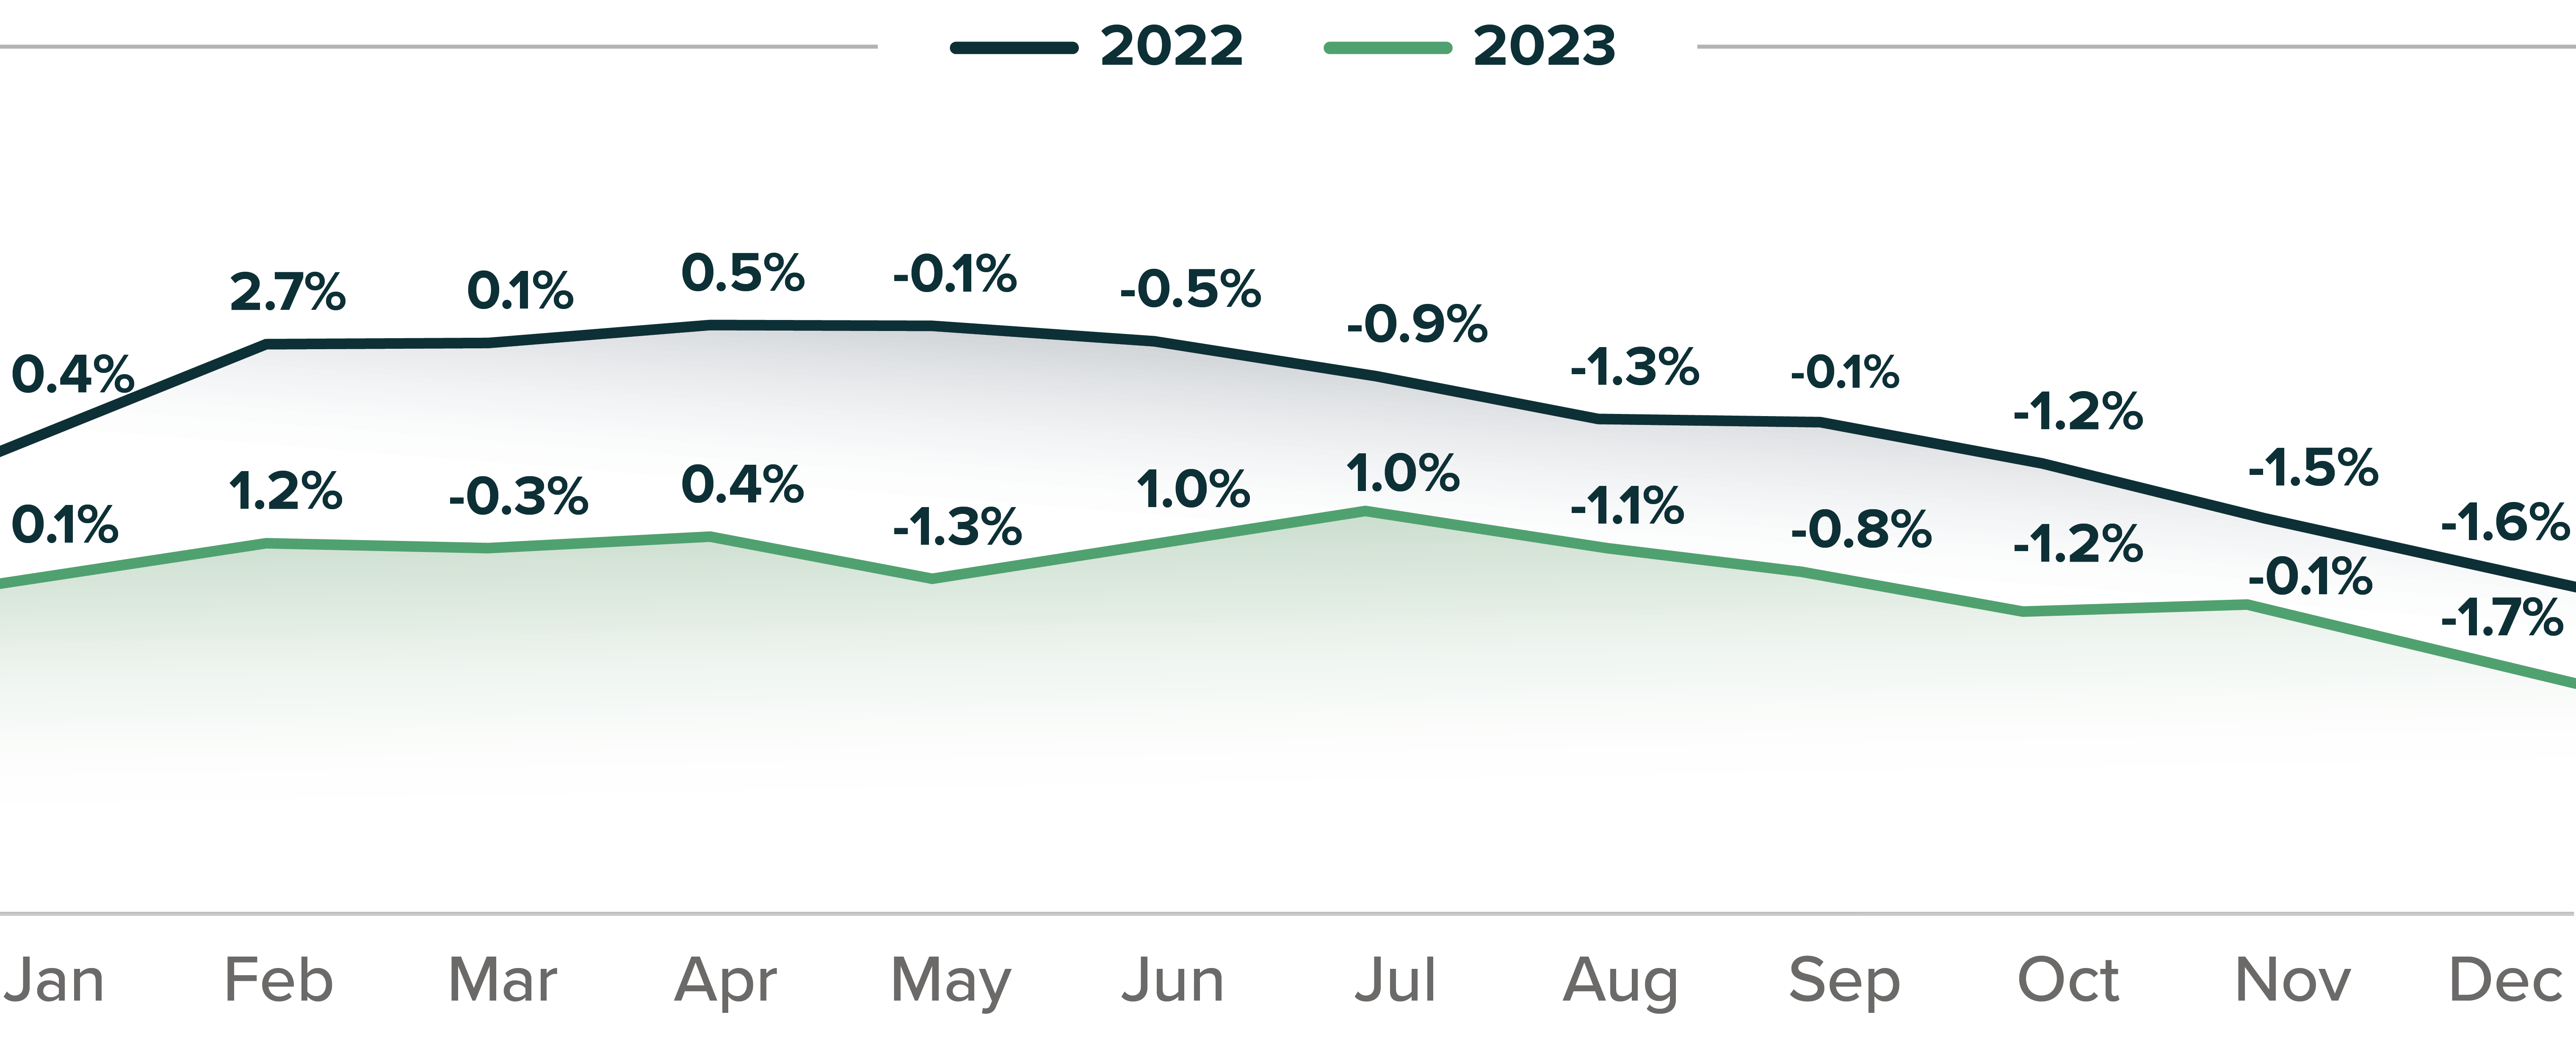 JM&A Group Automotive trends report year end 2023 vsc chart